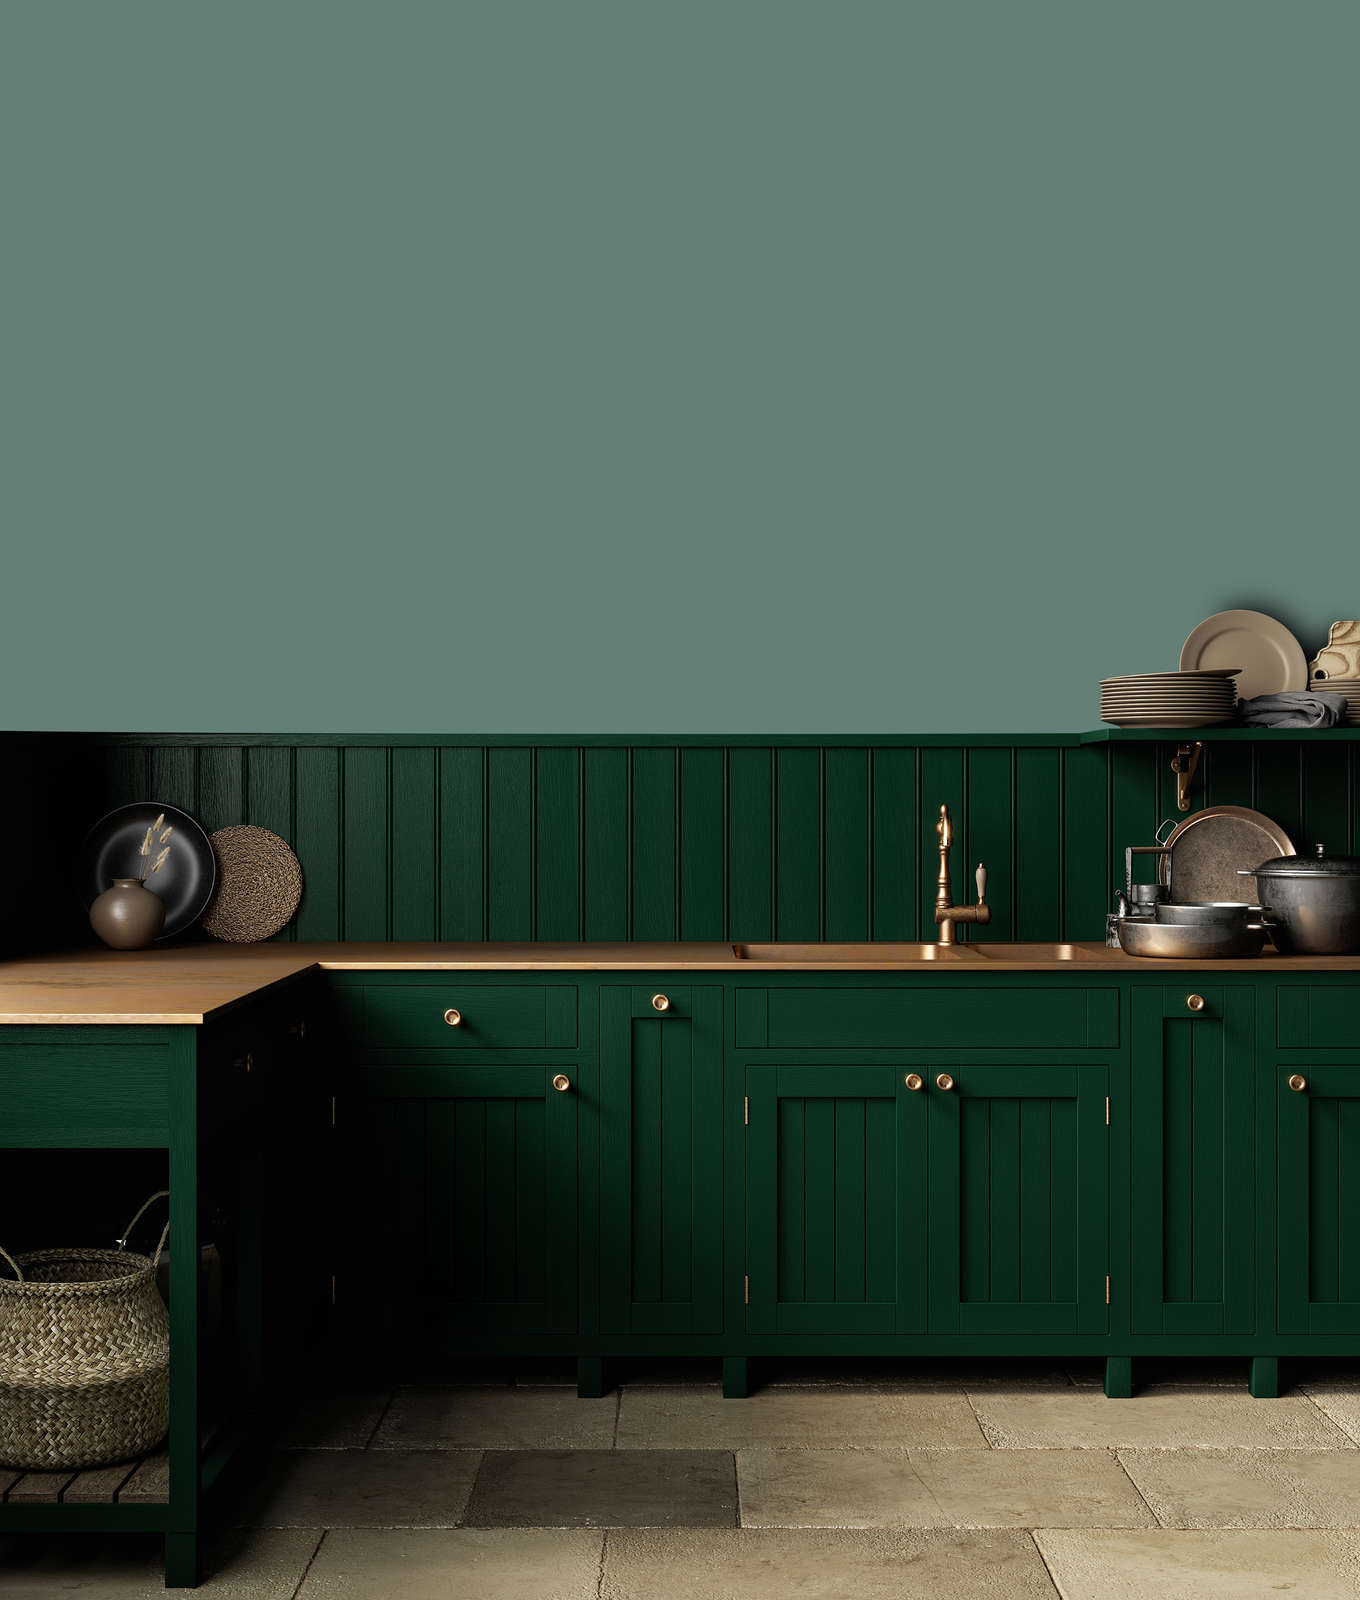             Premium Wall Paint Calm Eucalyptus »Expressive Emerald« NW410 – 1 litre
        